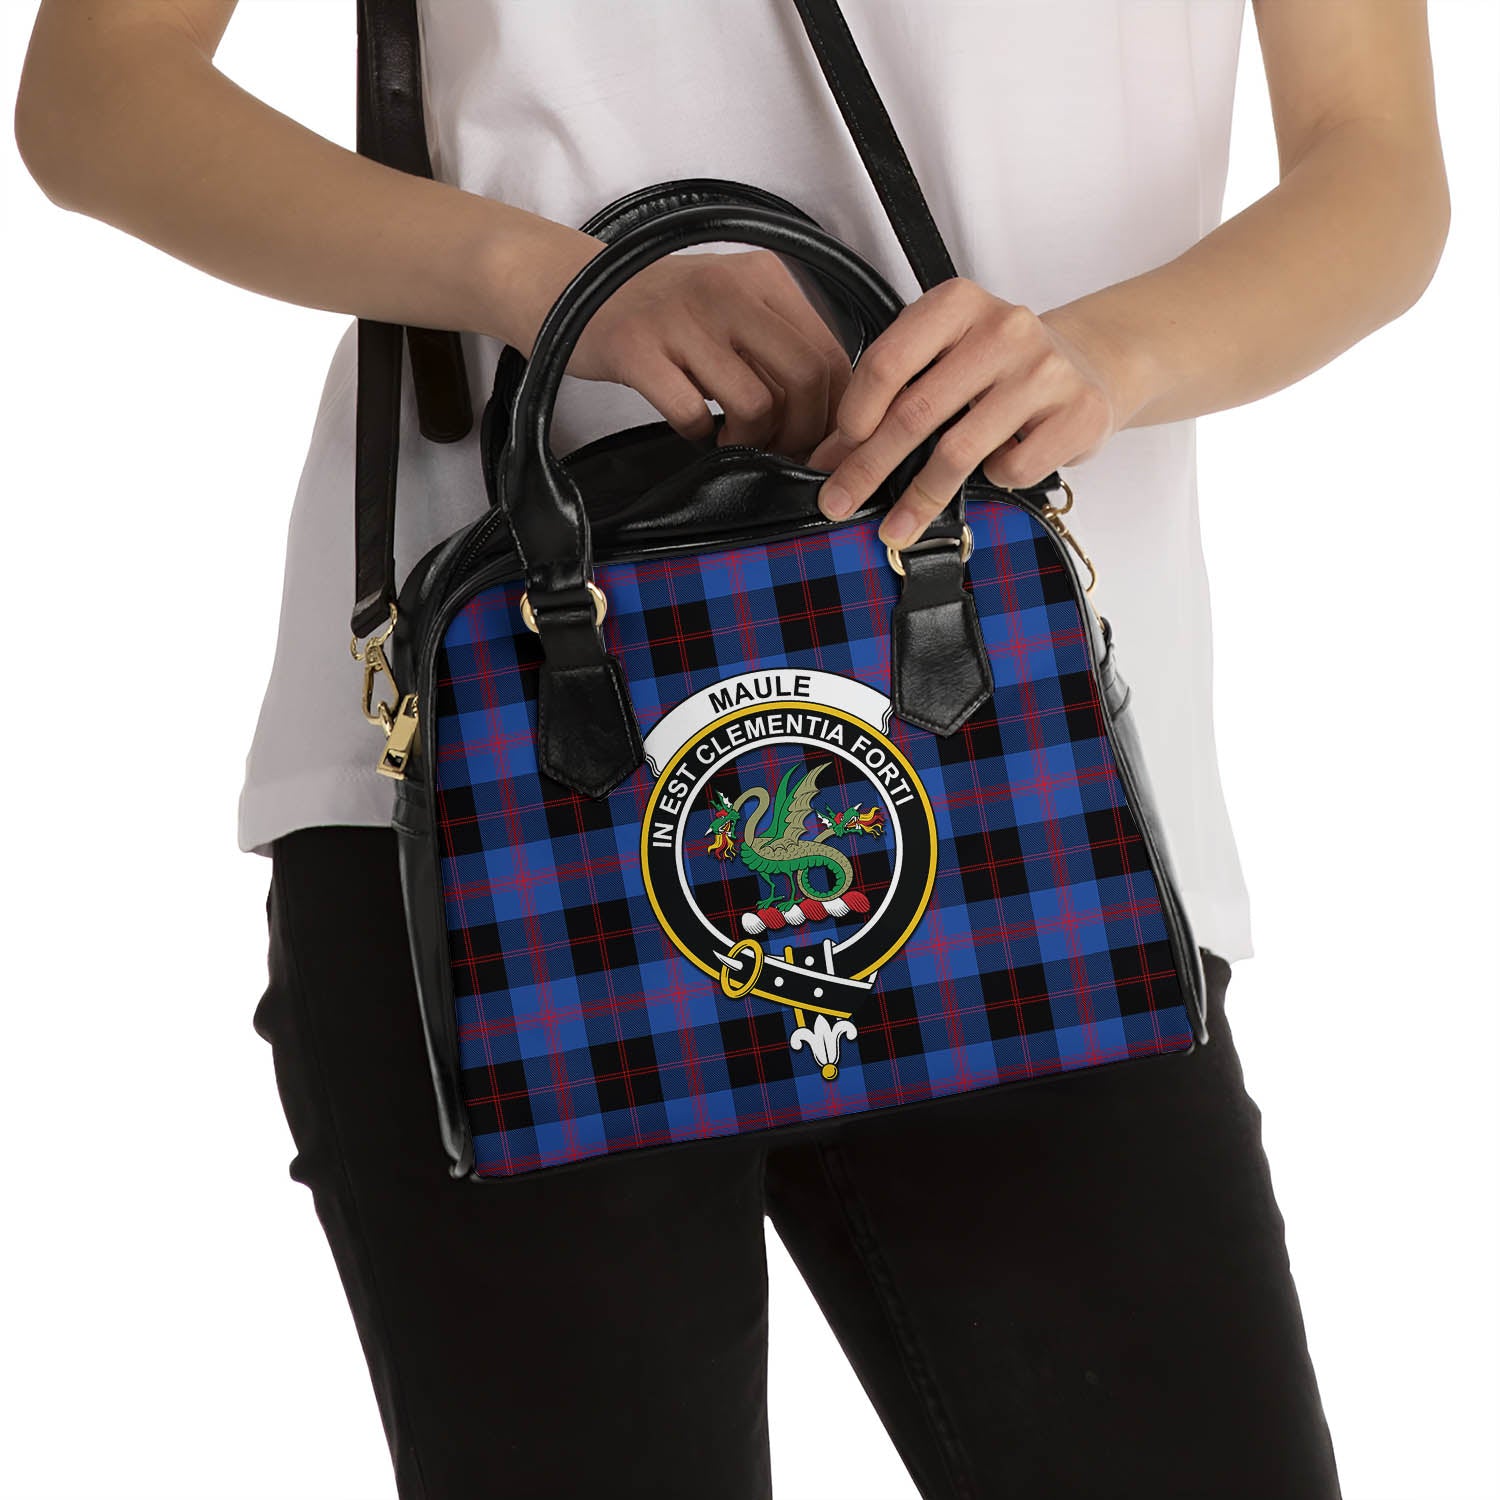 Maule Tartan Shoulder Handbags with Family Crest - Tartanvibesclothing